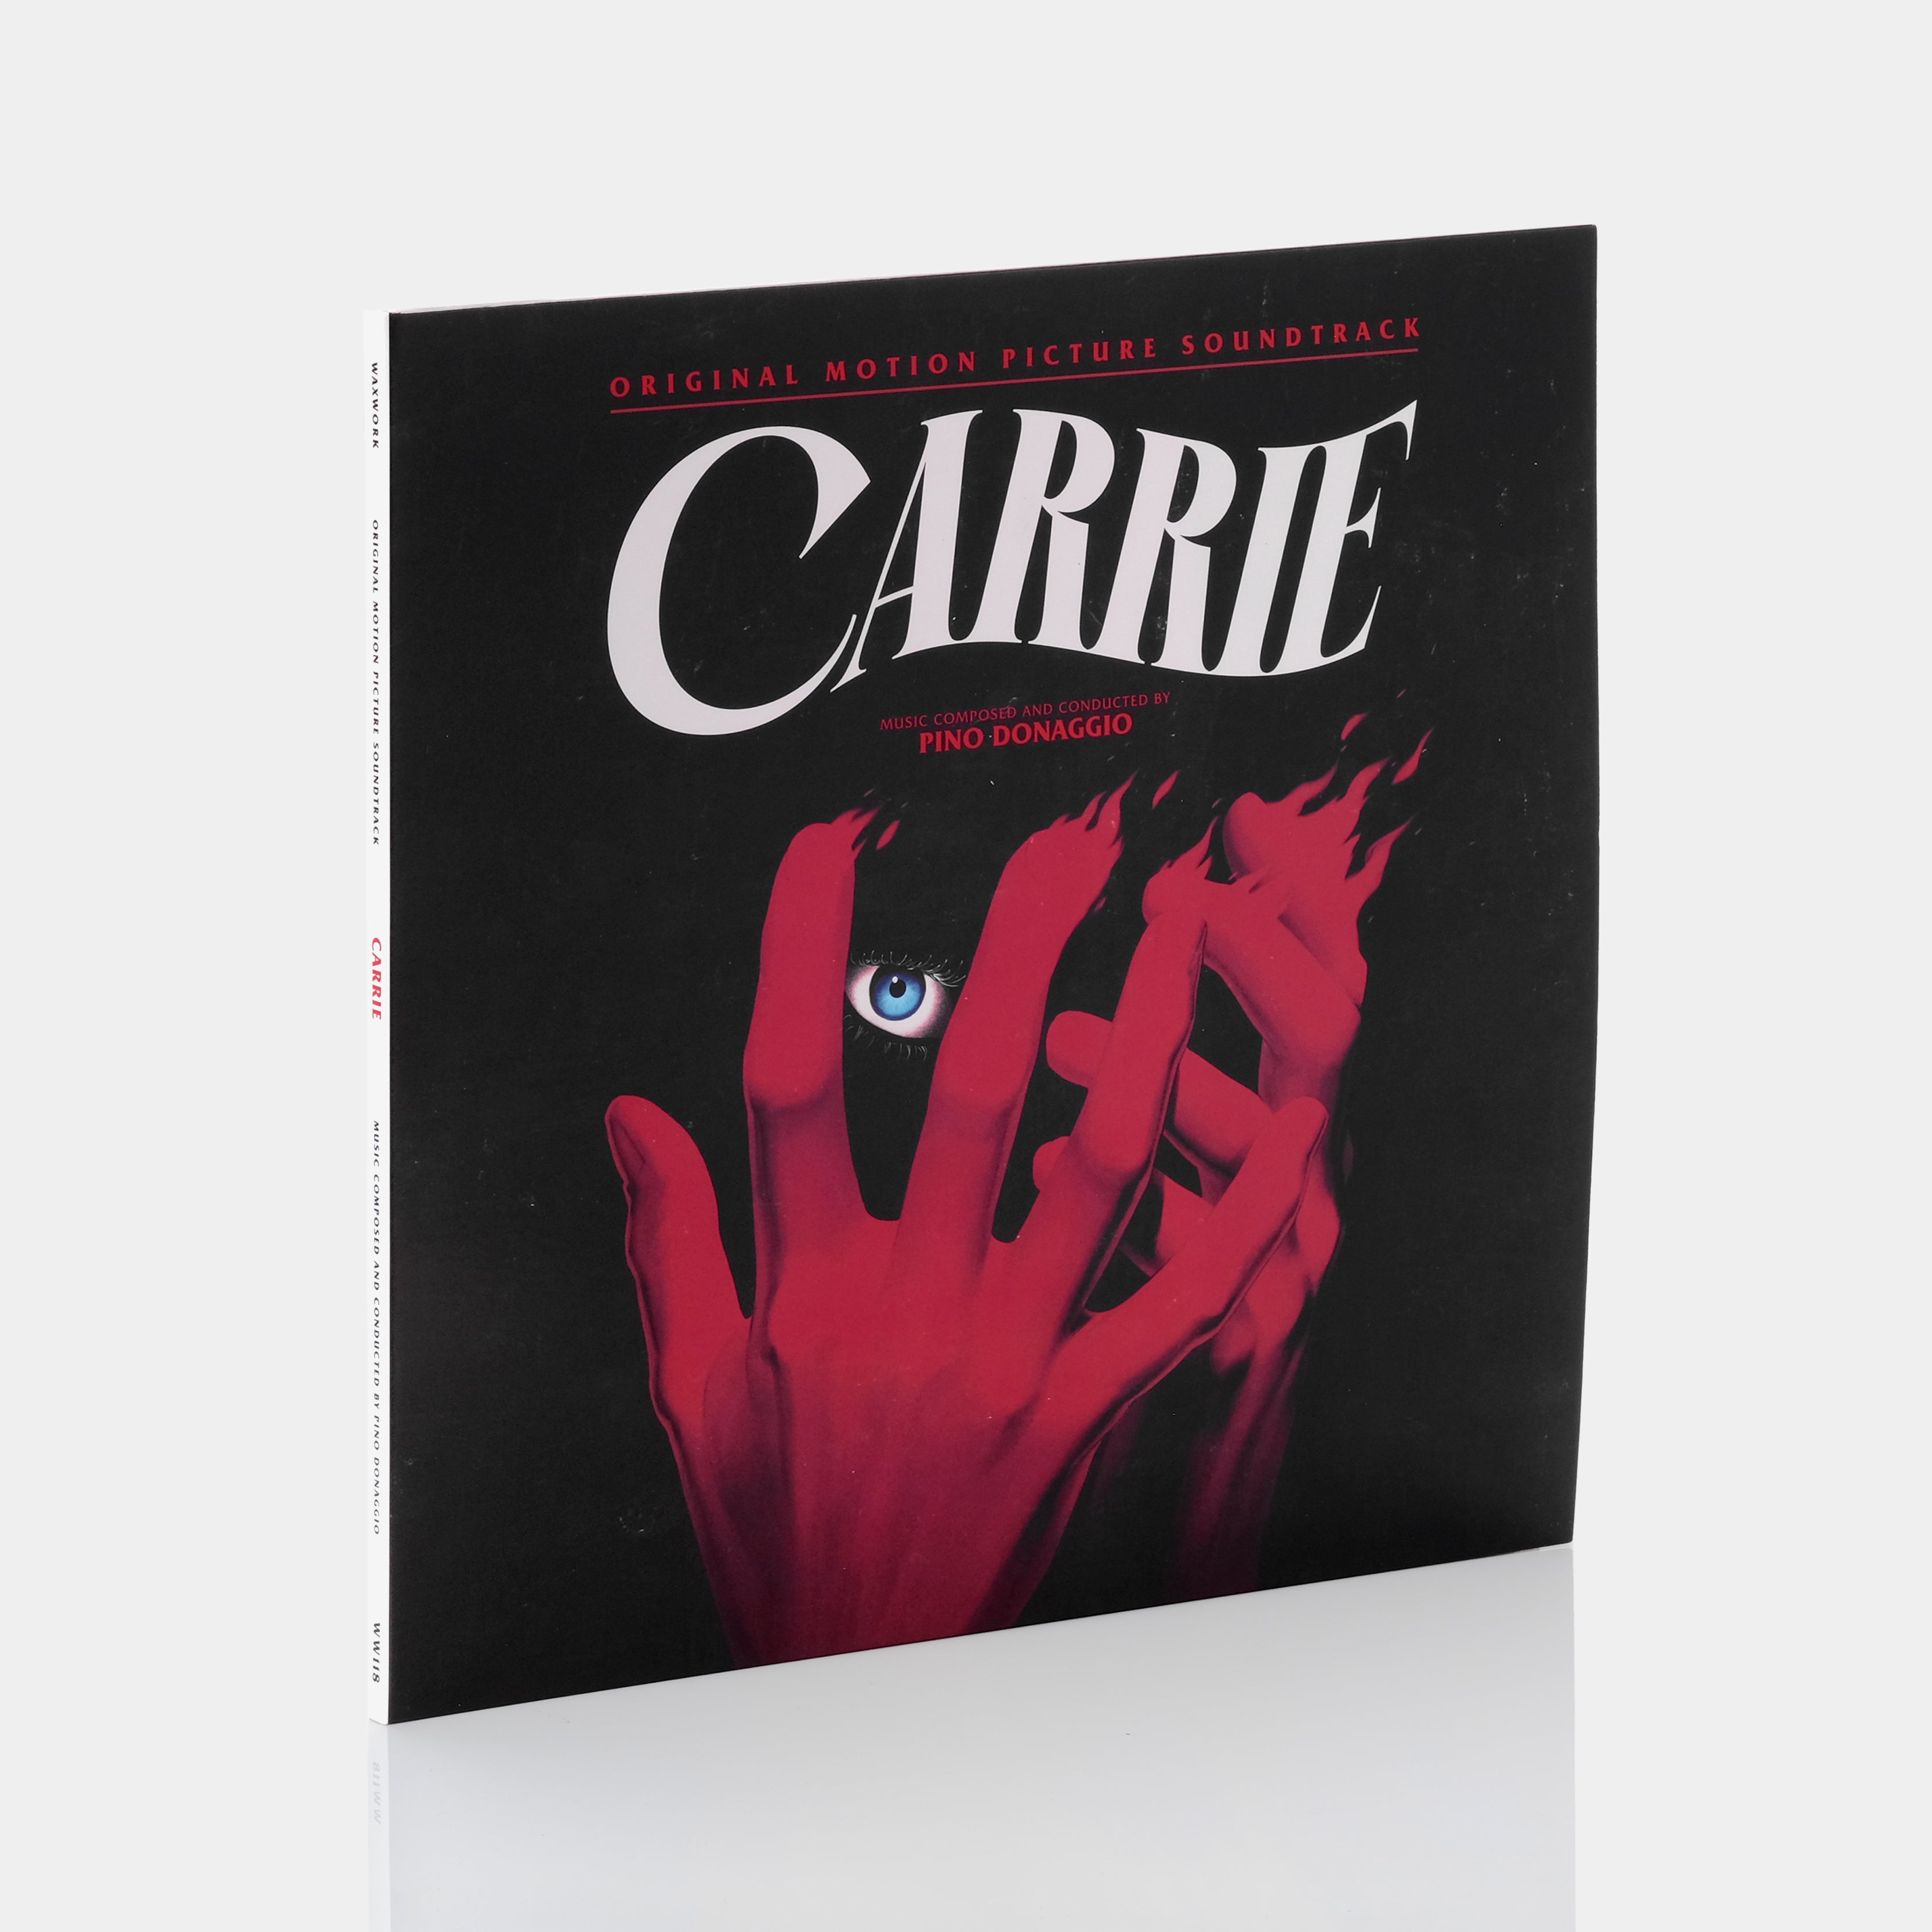 Pino Donaggio - Carrie (Original Motion Picture Soundtrack) 2xLP Orange & Red Splatter Vinyl Record